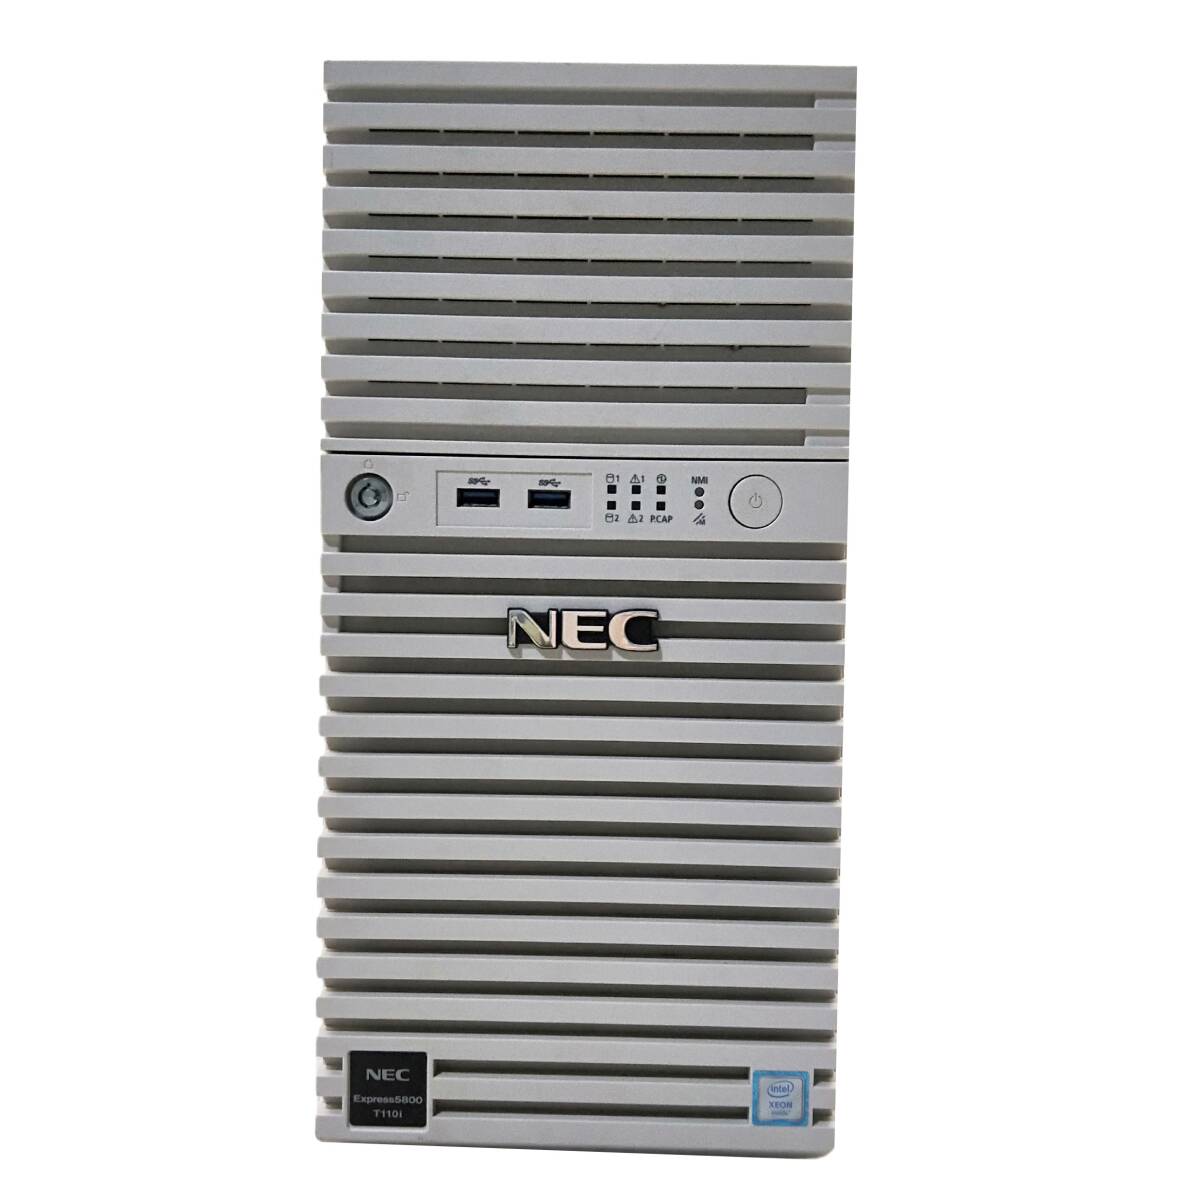 #. speed SSD NEC 5800 T110i XEON E3-1220V6 3.0GHz x4/8GB#SSD500GB Win11/Office2021 Pro/USB3.0/ addition wireless #I022121